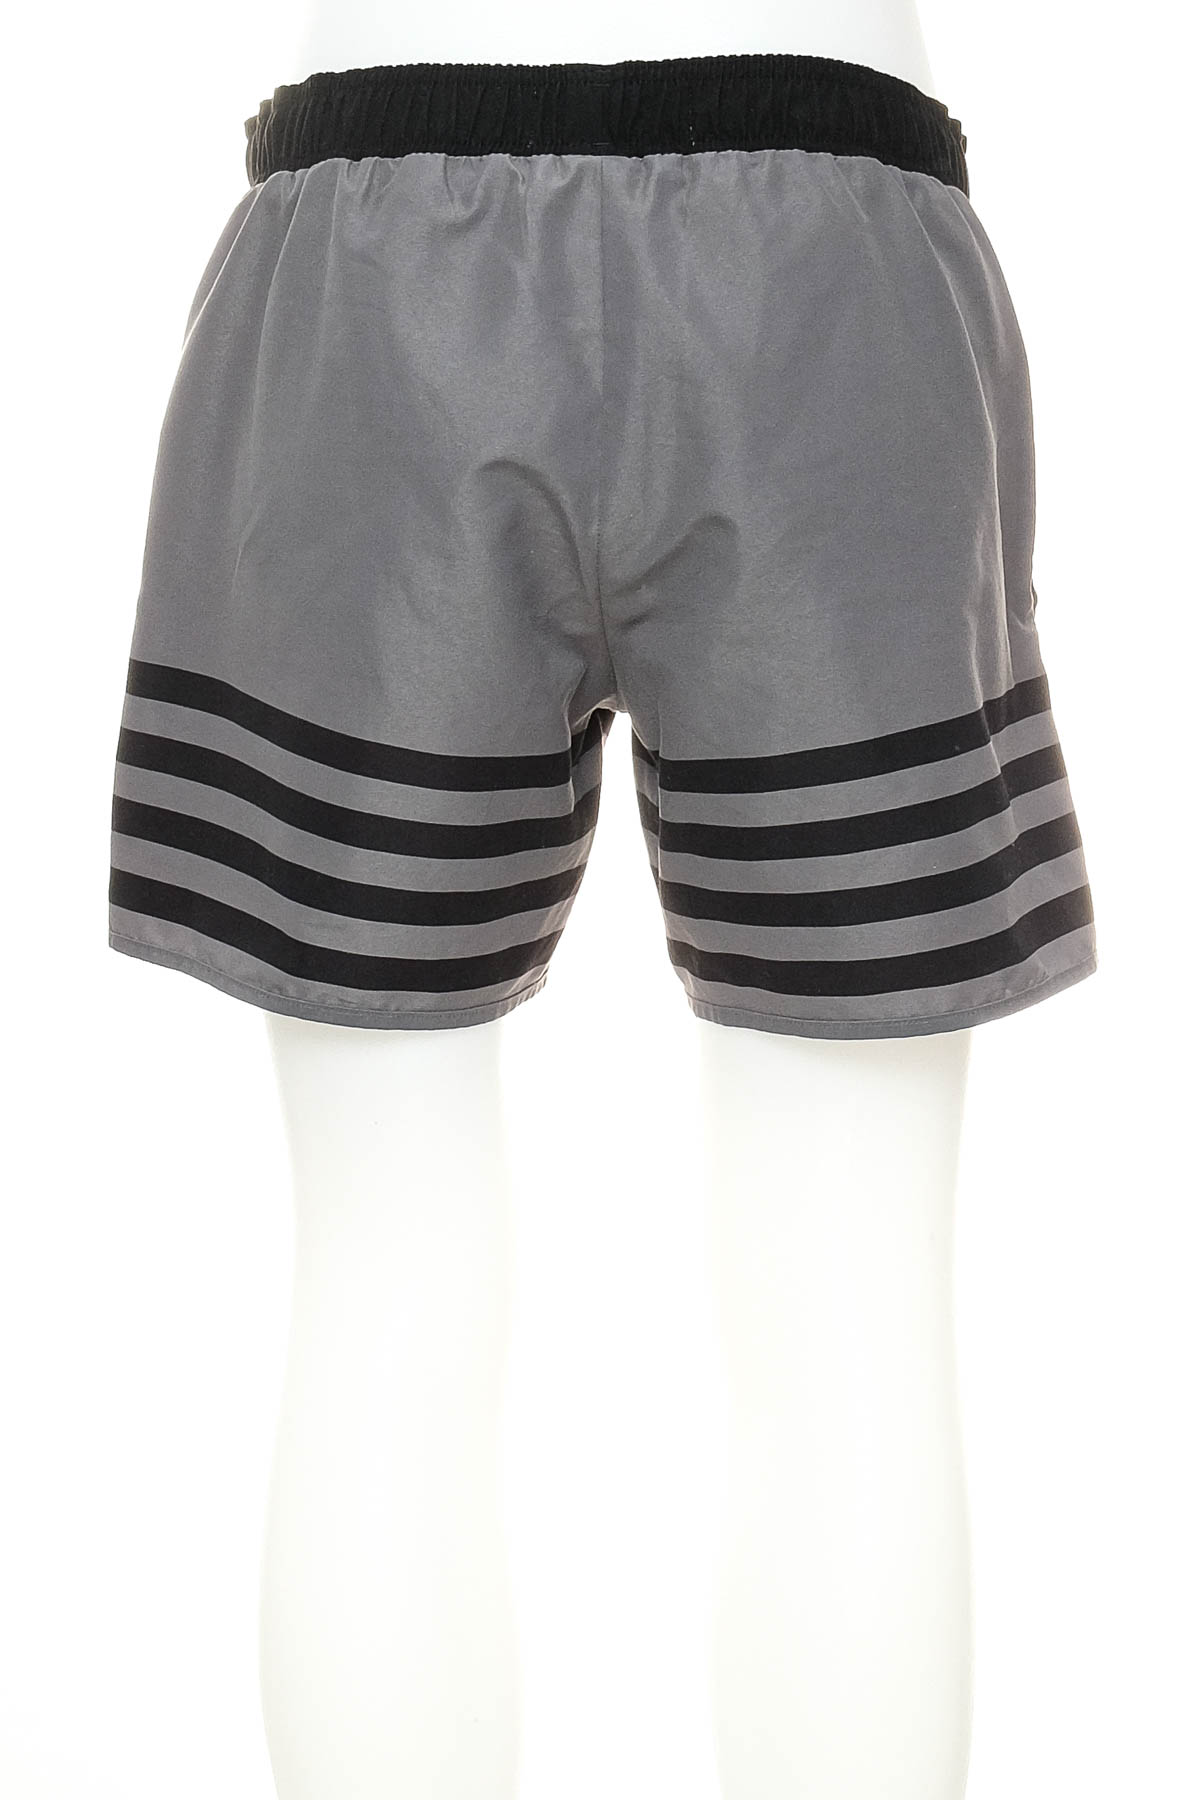 Men's shorts - Pier One - 1